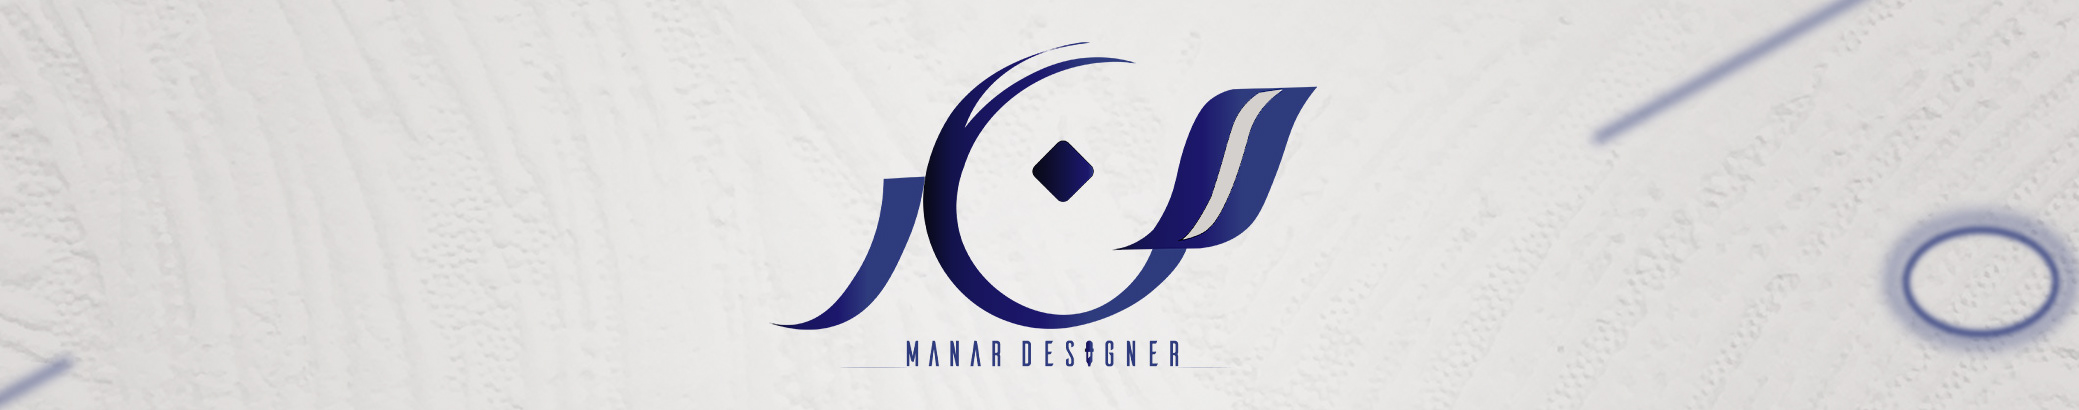 Manar Sh.n's profile banner